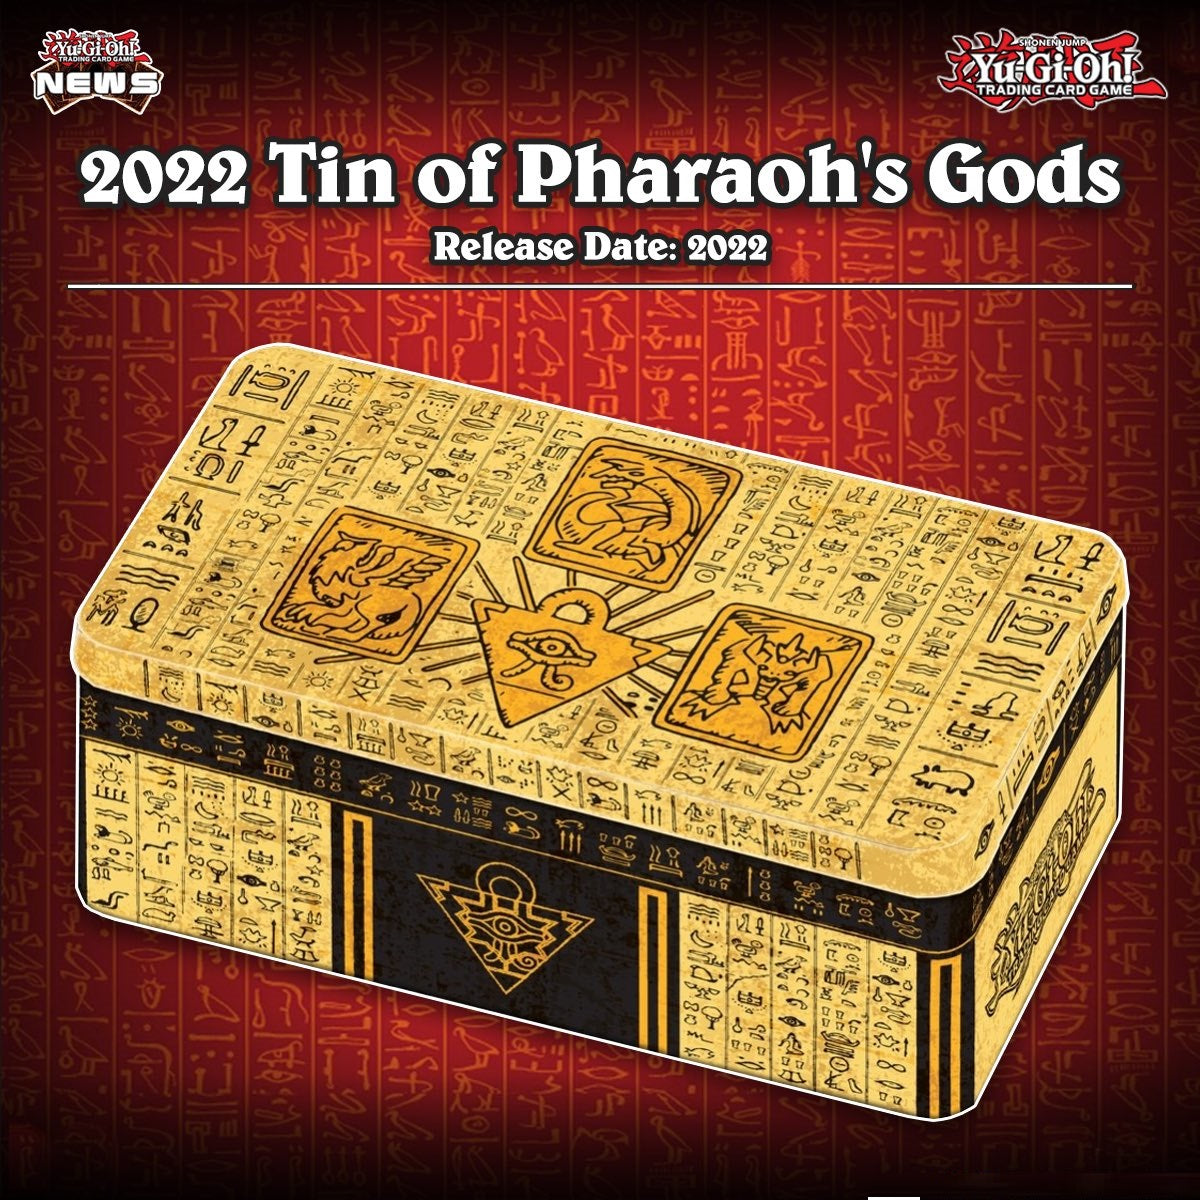 Yu-Gi-Oh TCG: 2022 Tin of the Pharaoh's Gods (English)-Konami-Ace Cards & Collectibles